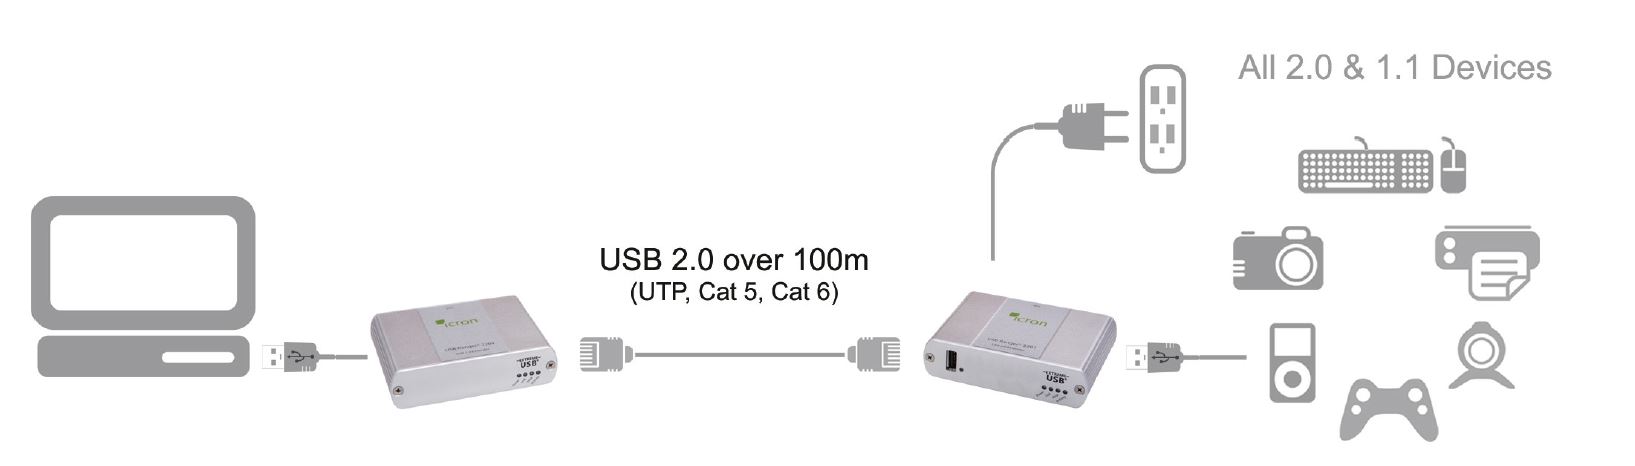 00-00298-icron-usb-2-0-ranger-2201-usb-extender-cat-5e-100m-diagramm